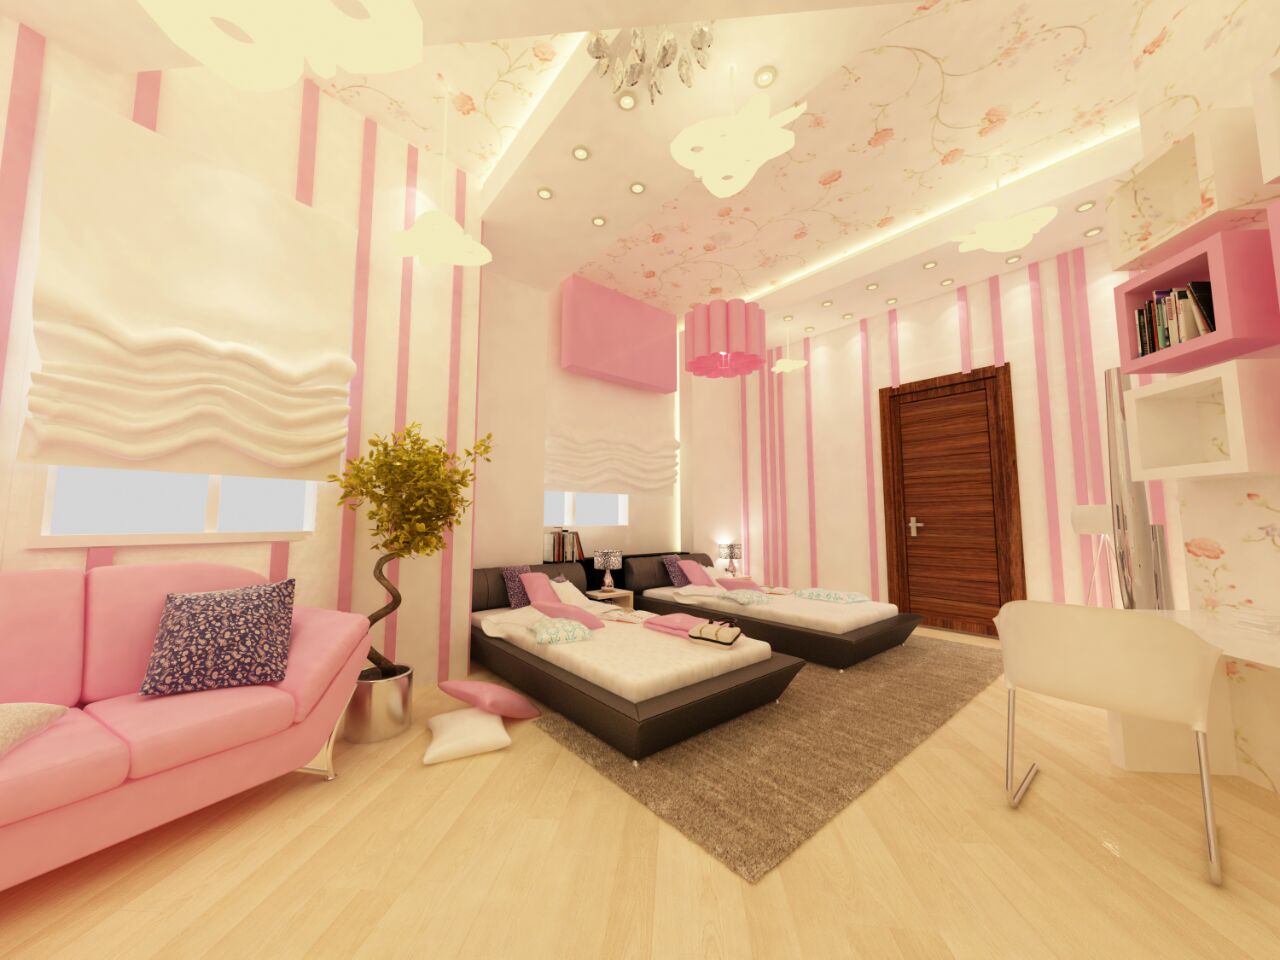 Bedrooms Decoration